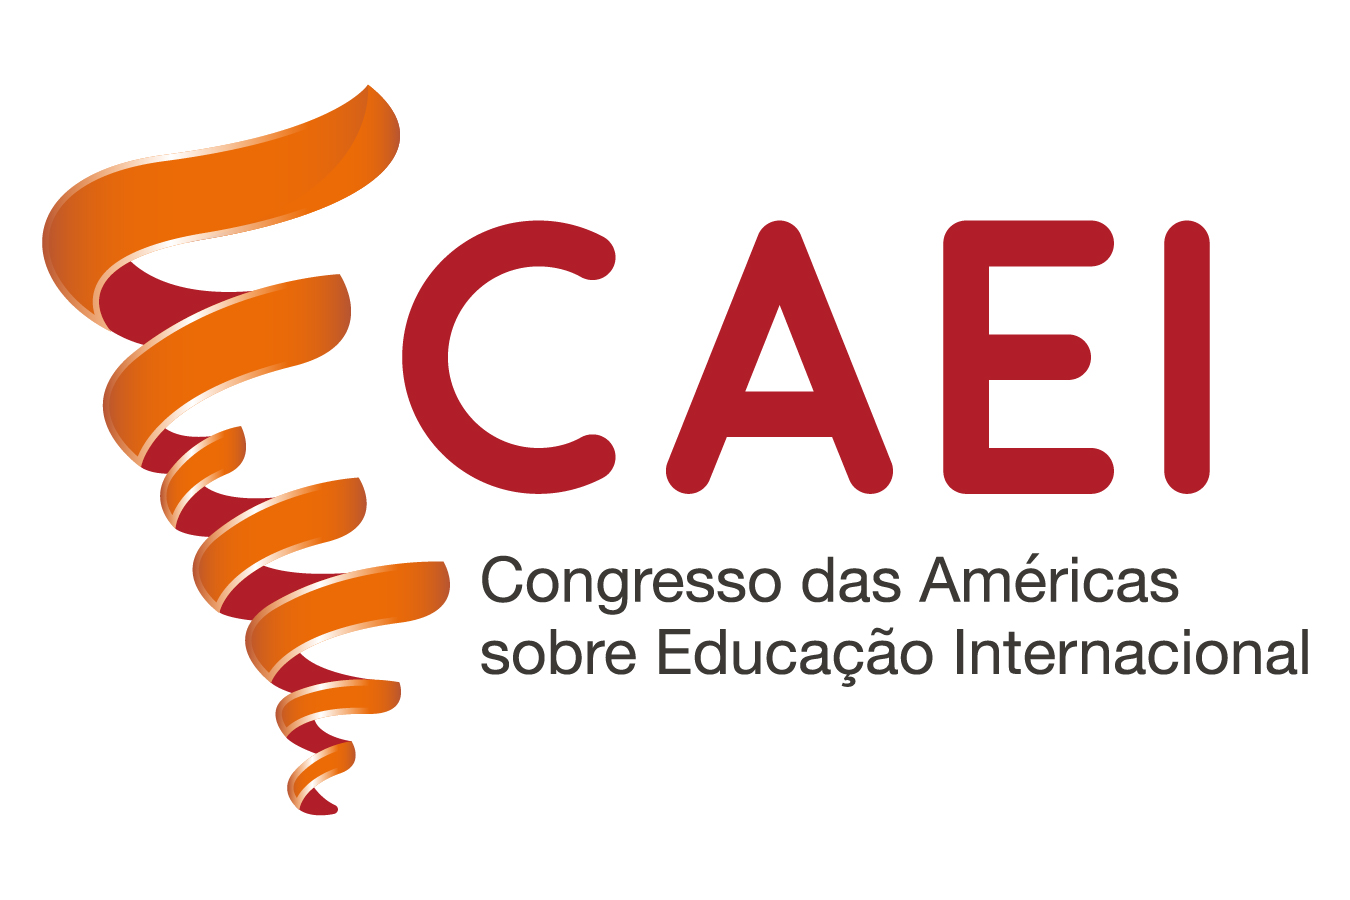 CAEI logo - Portuguese